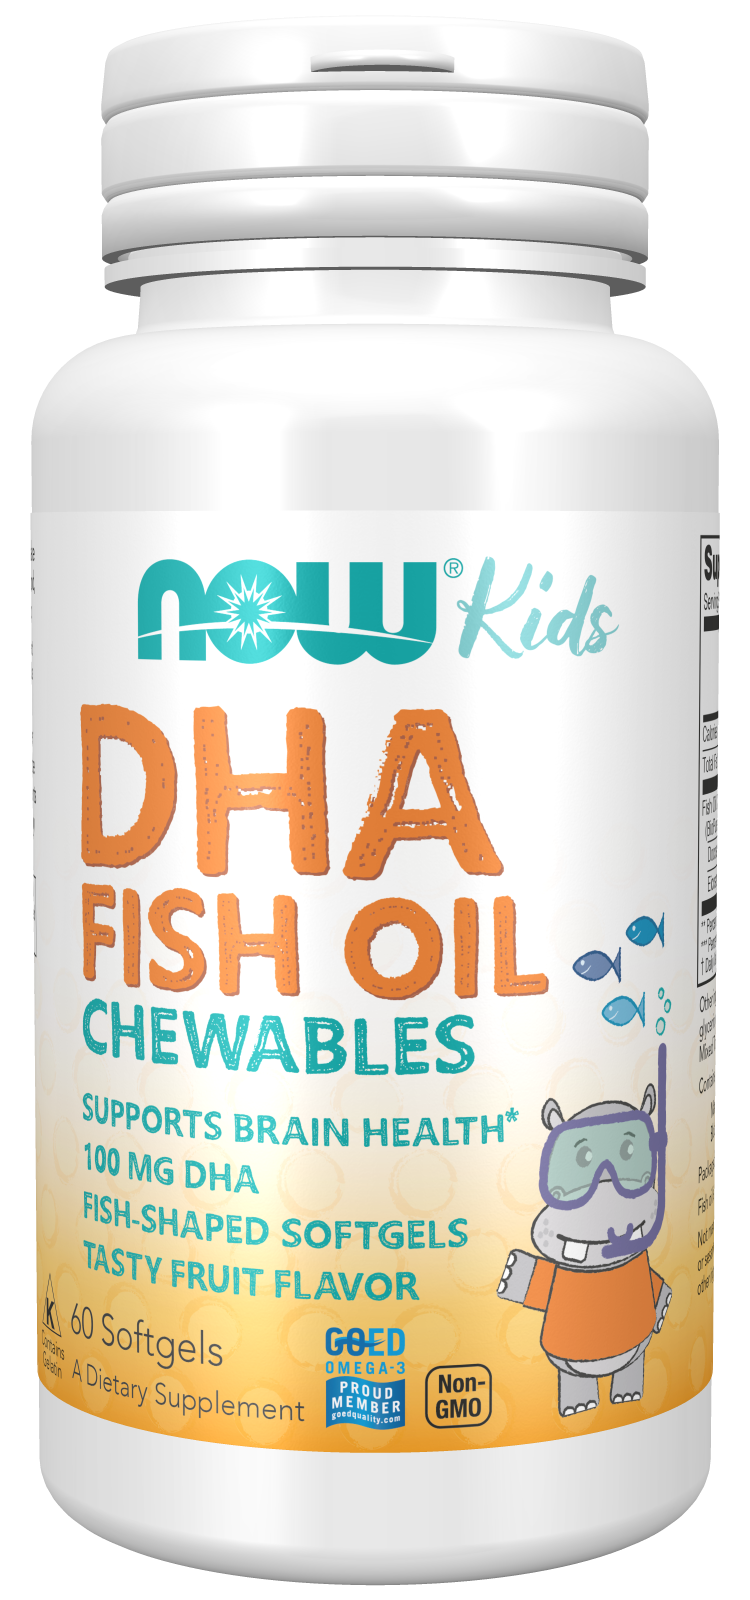 DHA Kids Chewable - 60 Softgels Bottle Front